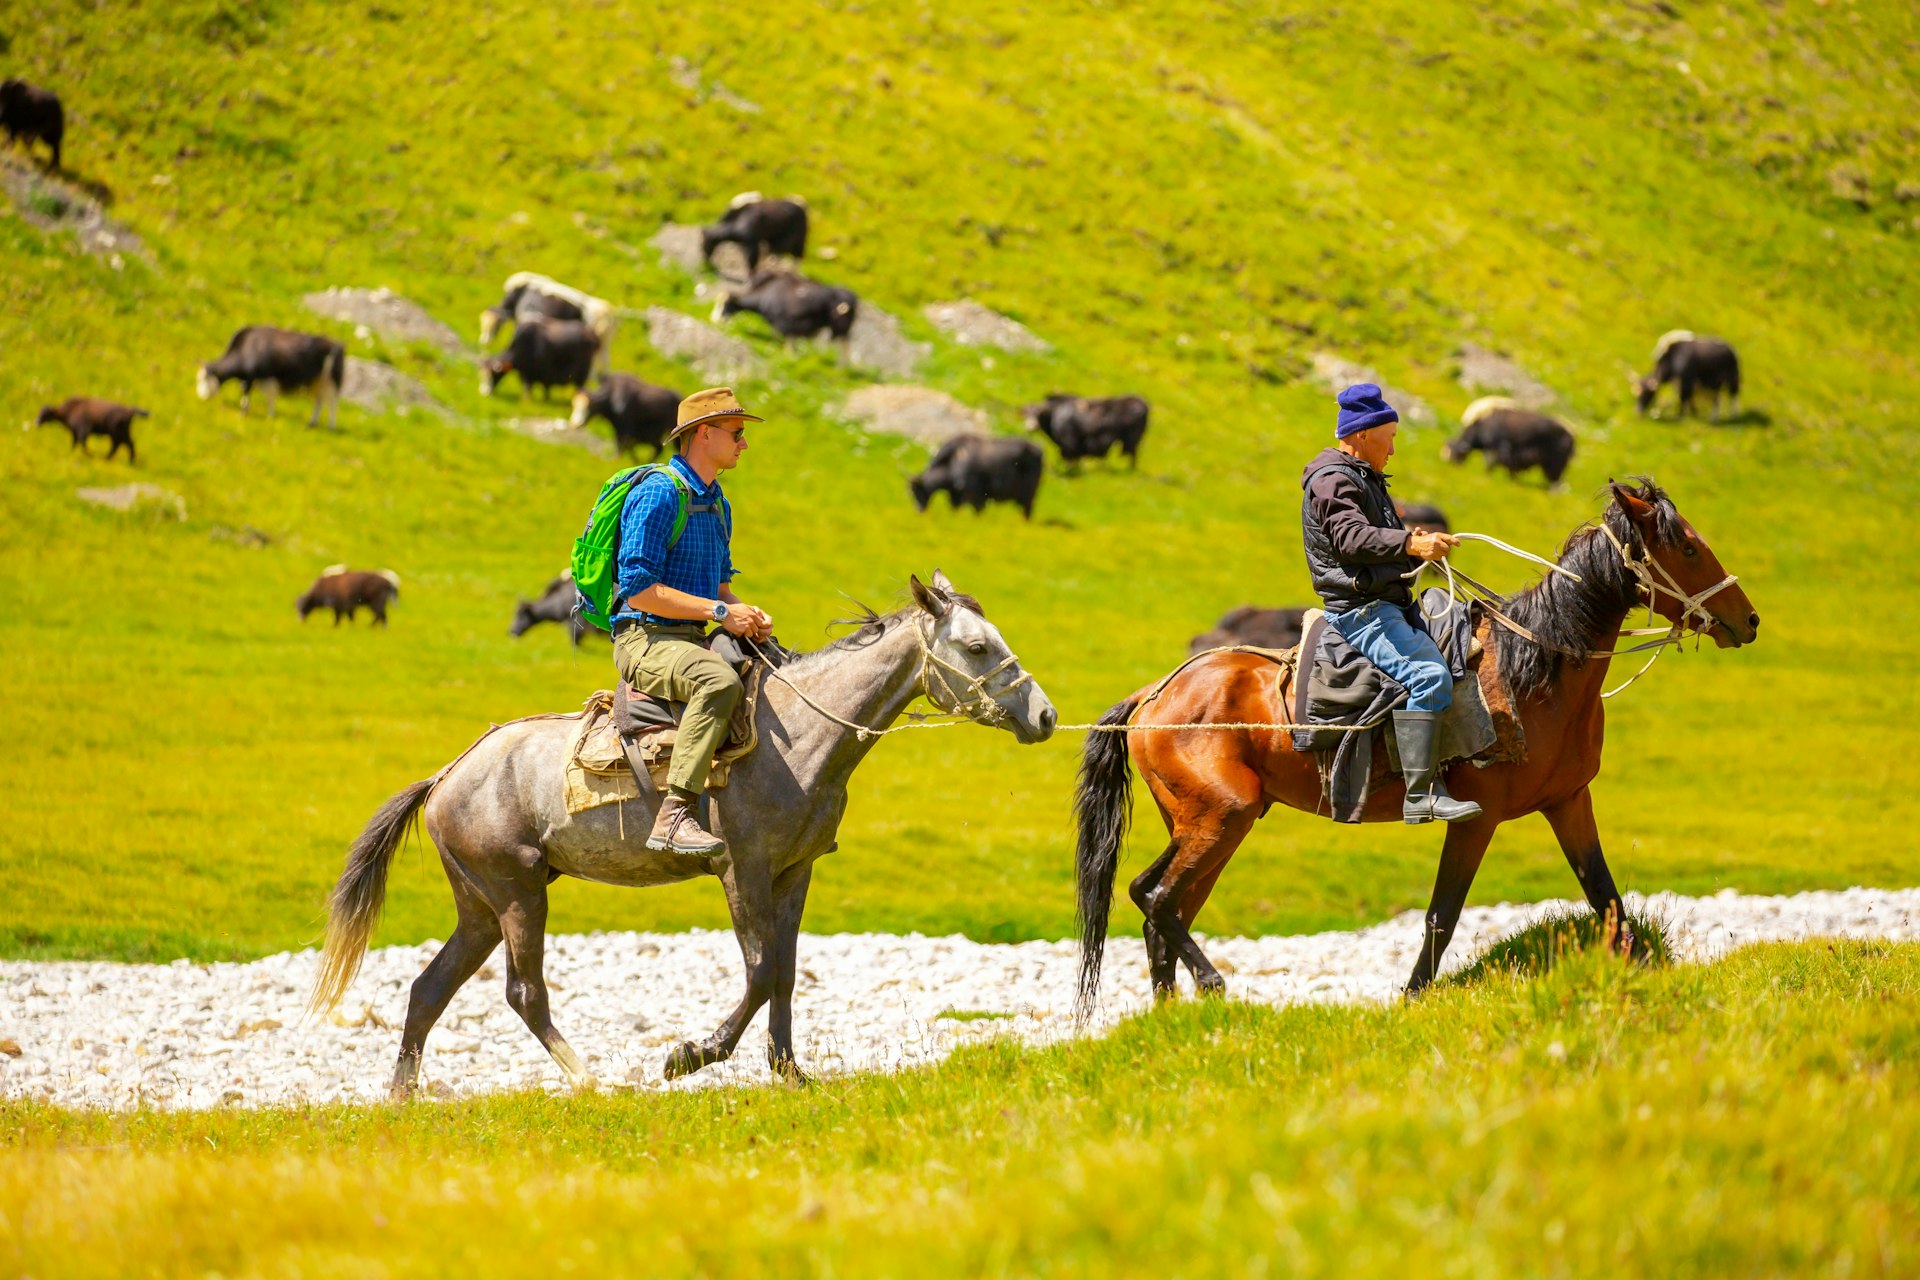 Two men riding horses gallop through the mountains in Kyrgyzstan, Central Asia